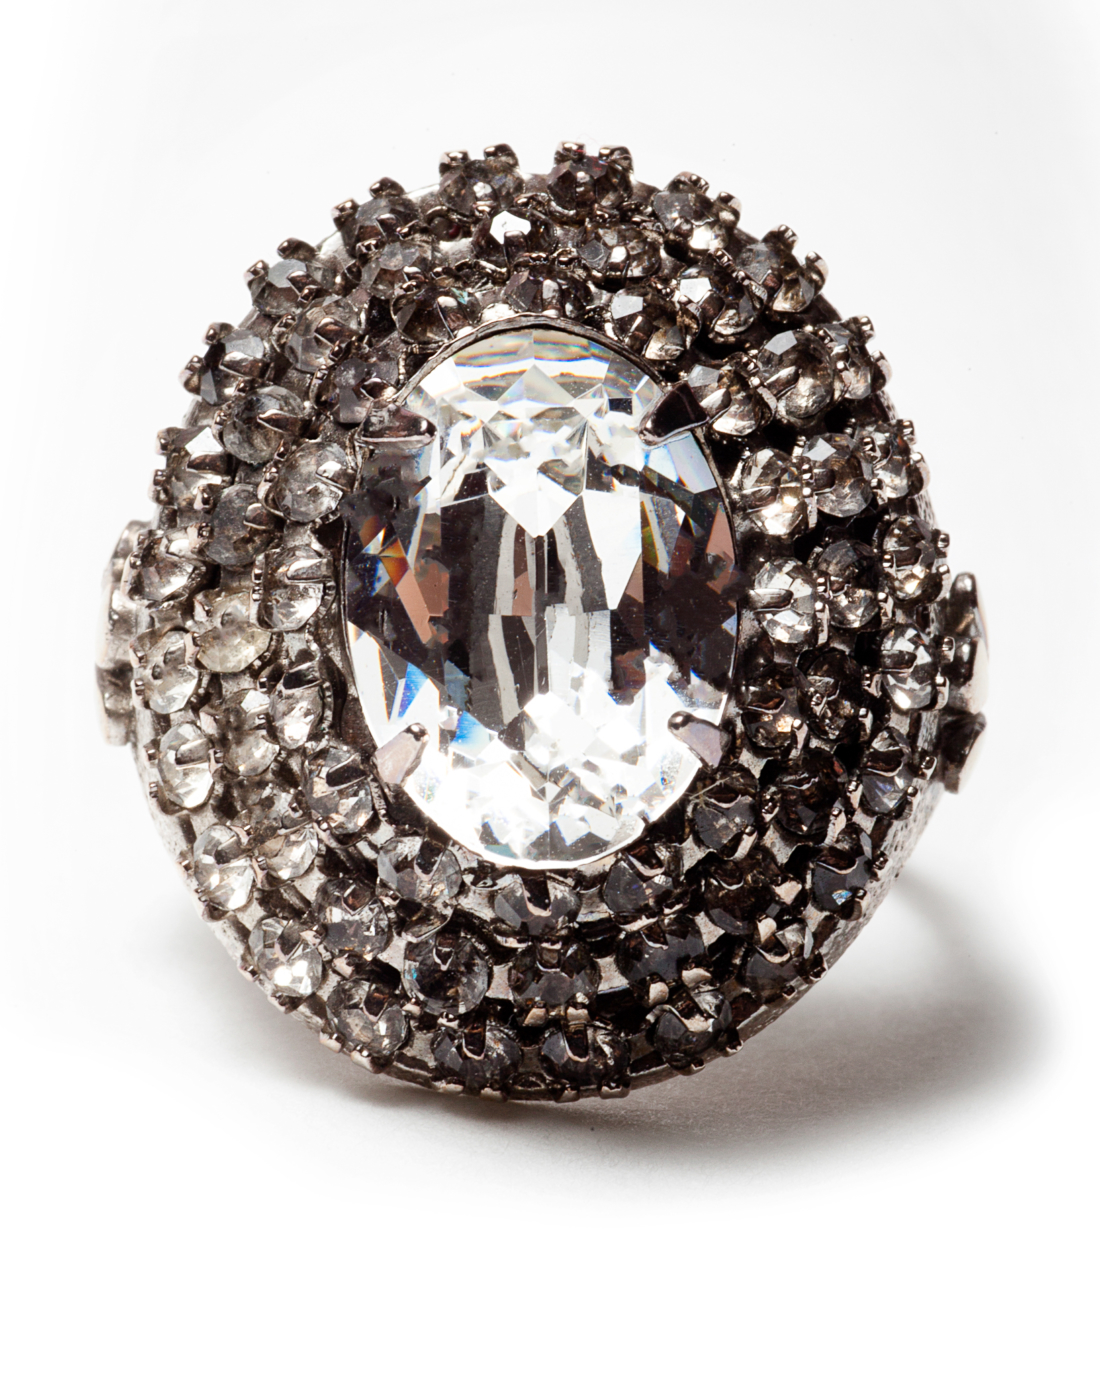 Crystal Diamante Cluster Silver Cocktail Ring, circa 1960's